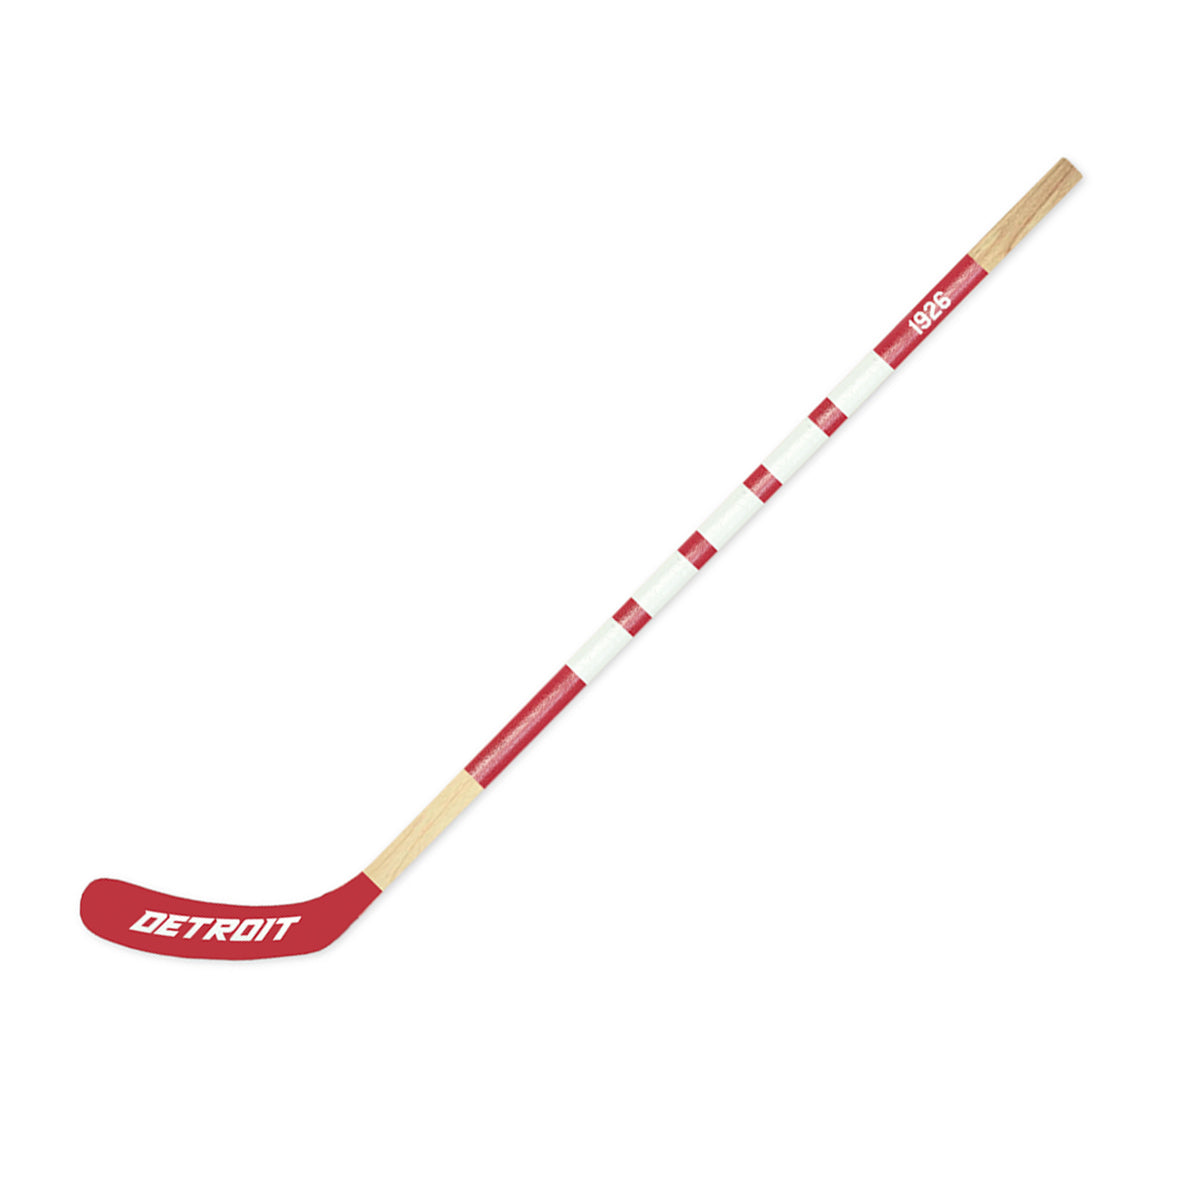 Detroit Mitchell Hockey Stick